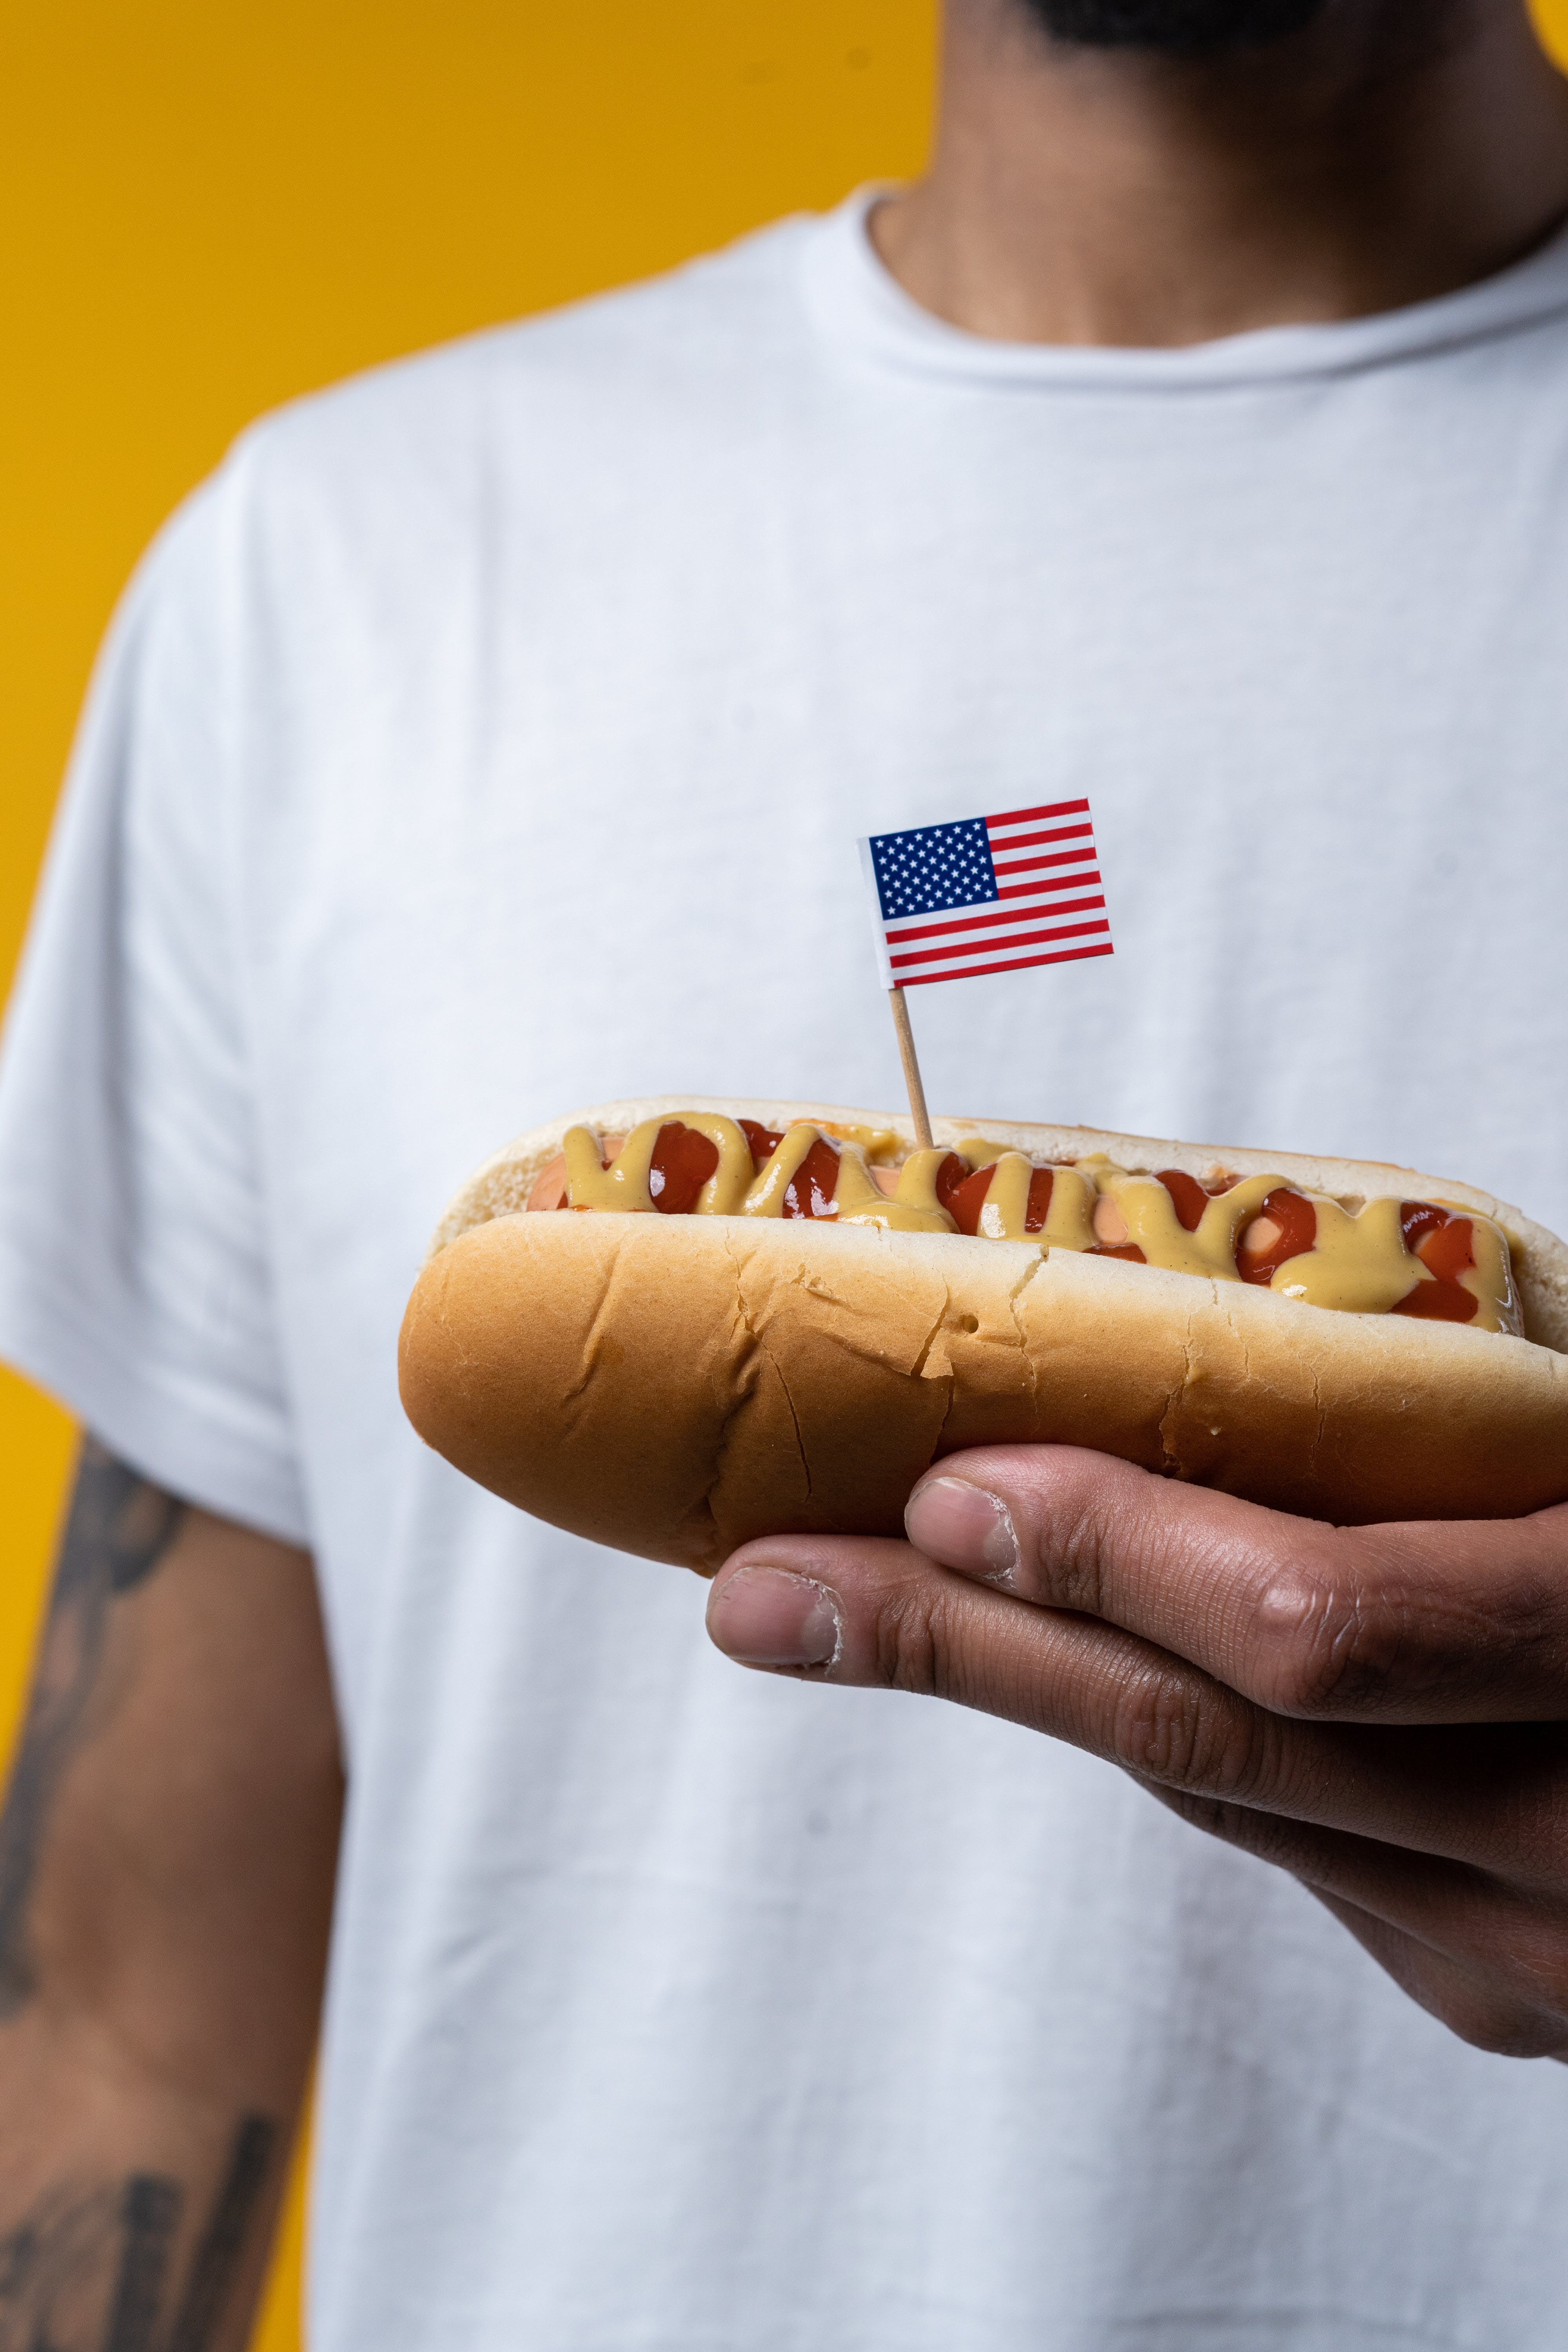 A man holding a hotdog | Source: Pexels